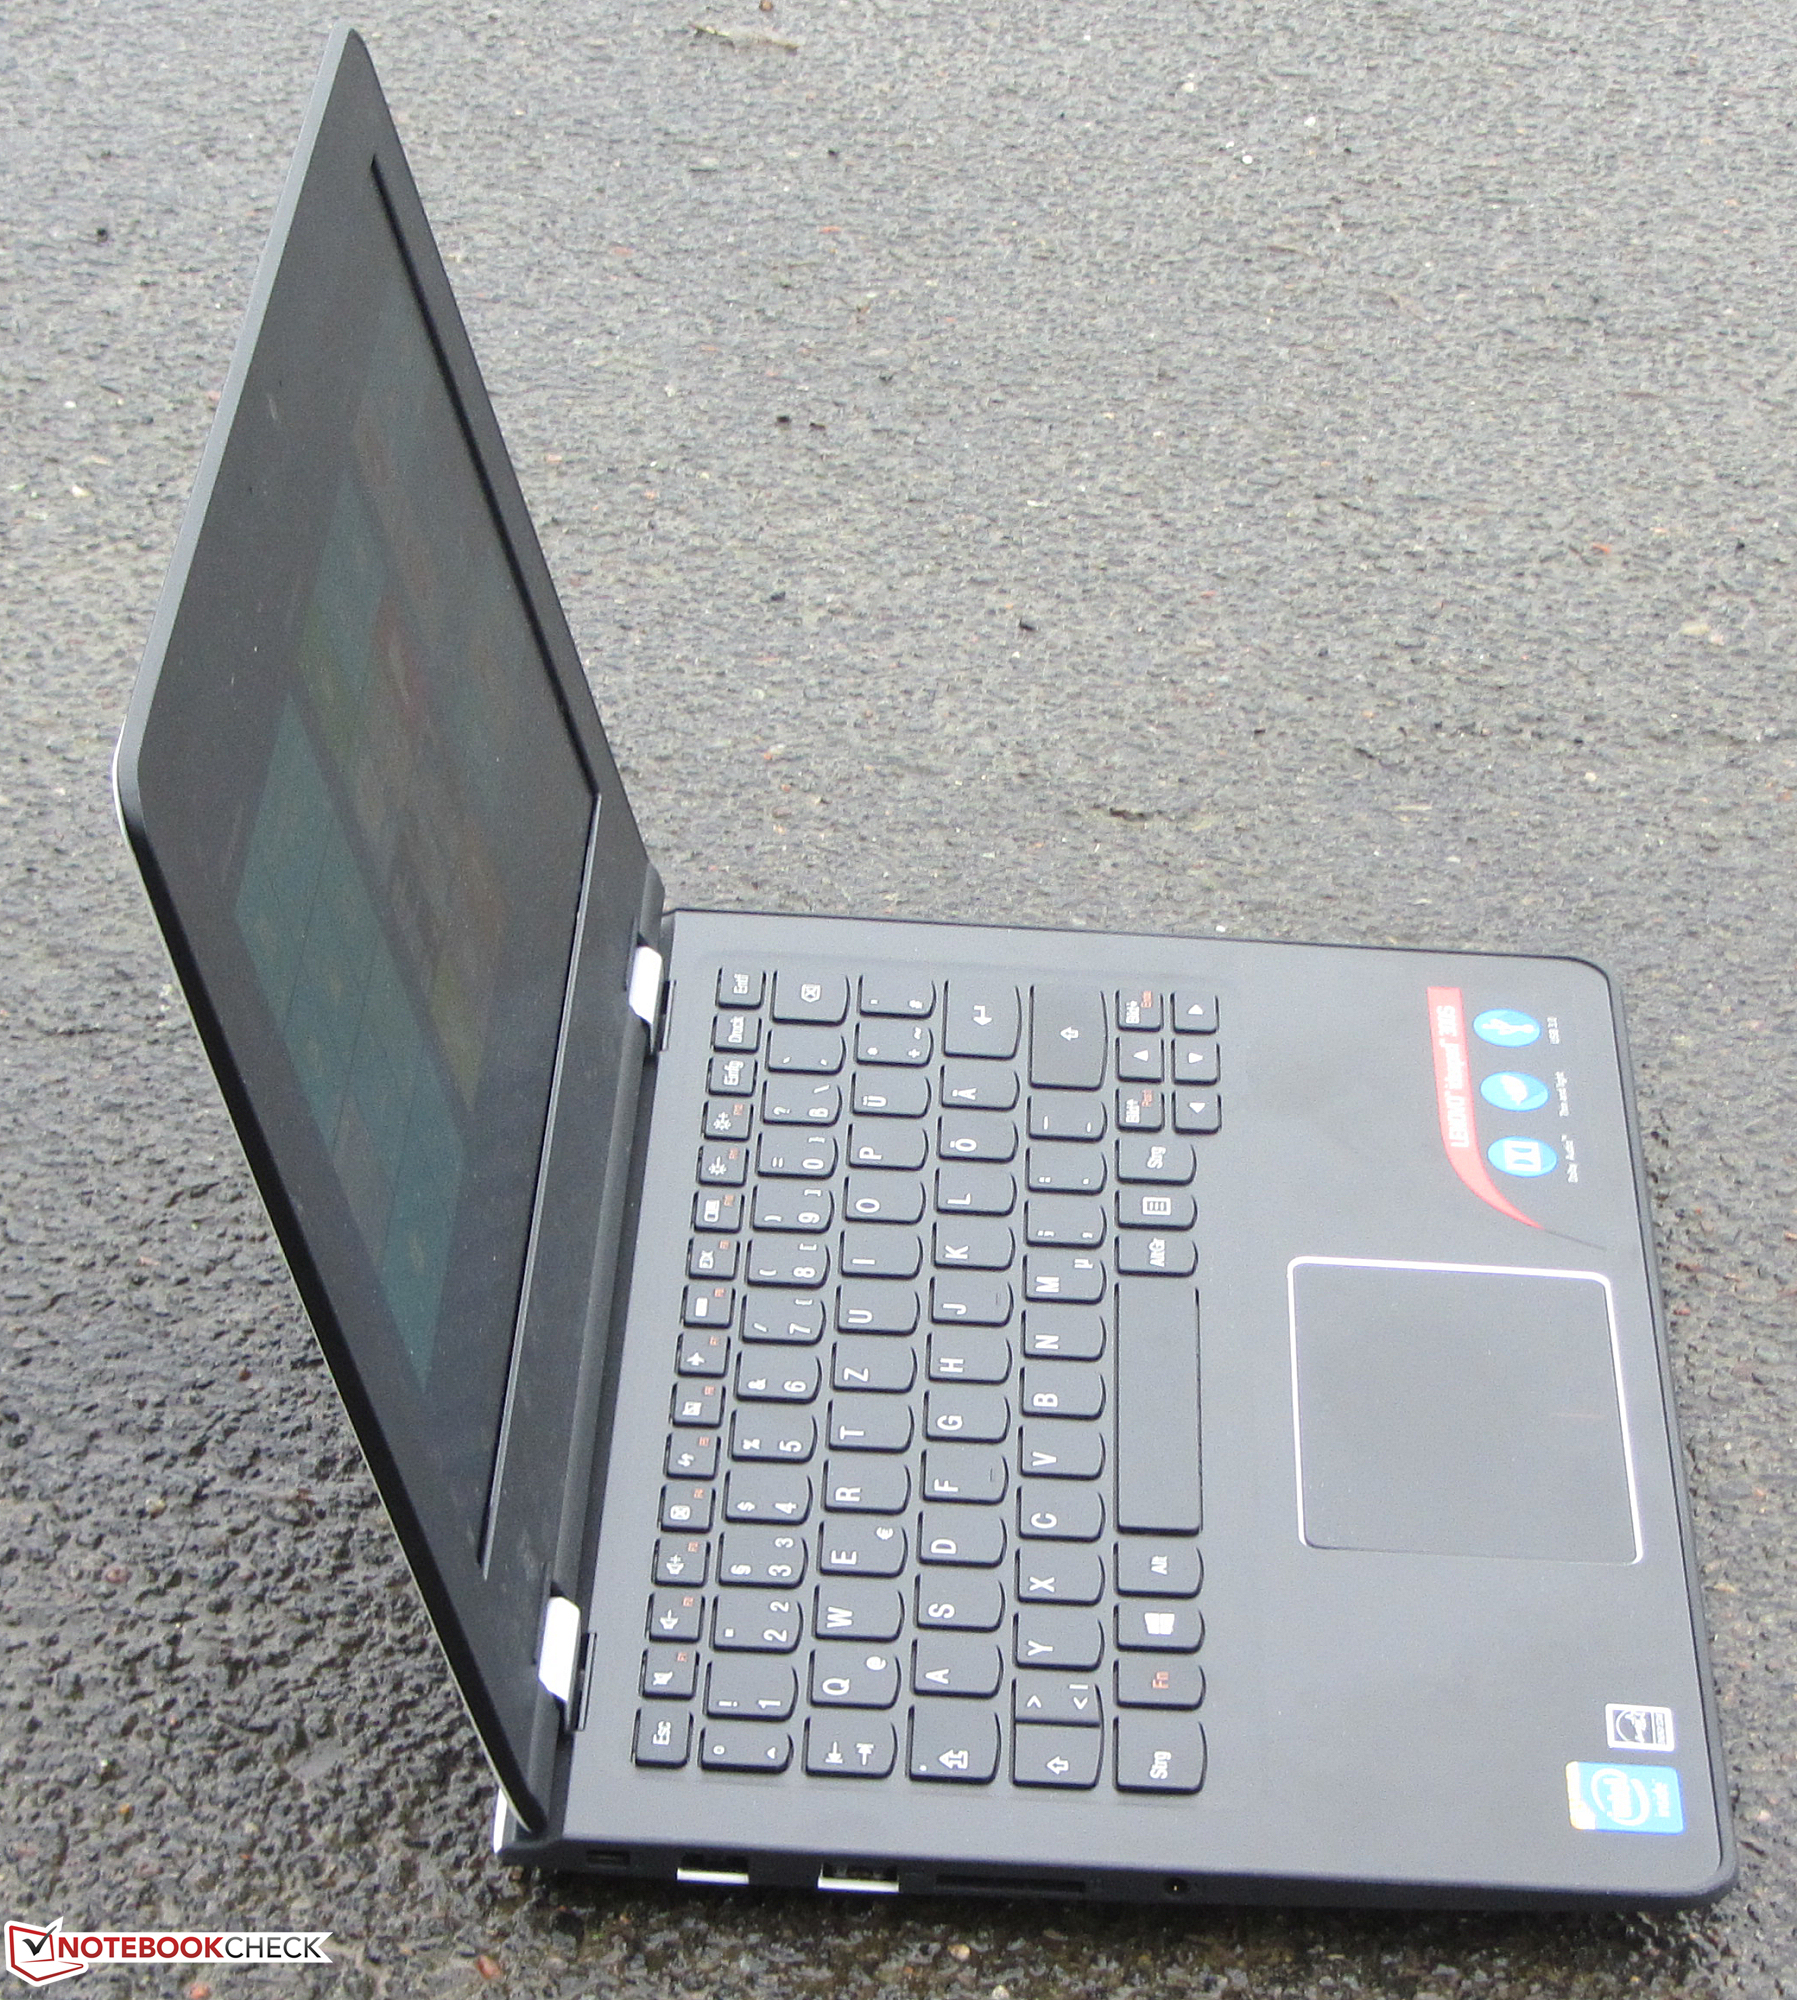 Lenovo IdeaPad 300S-11IBR Netbook Review - NotebookCheck.net Reviews